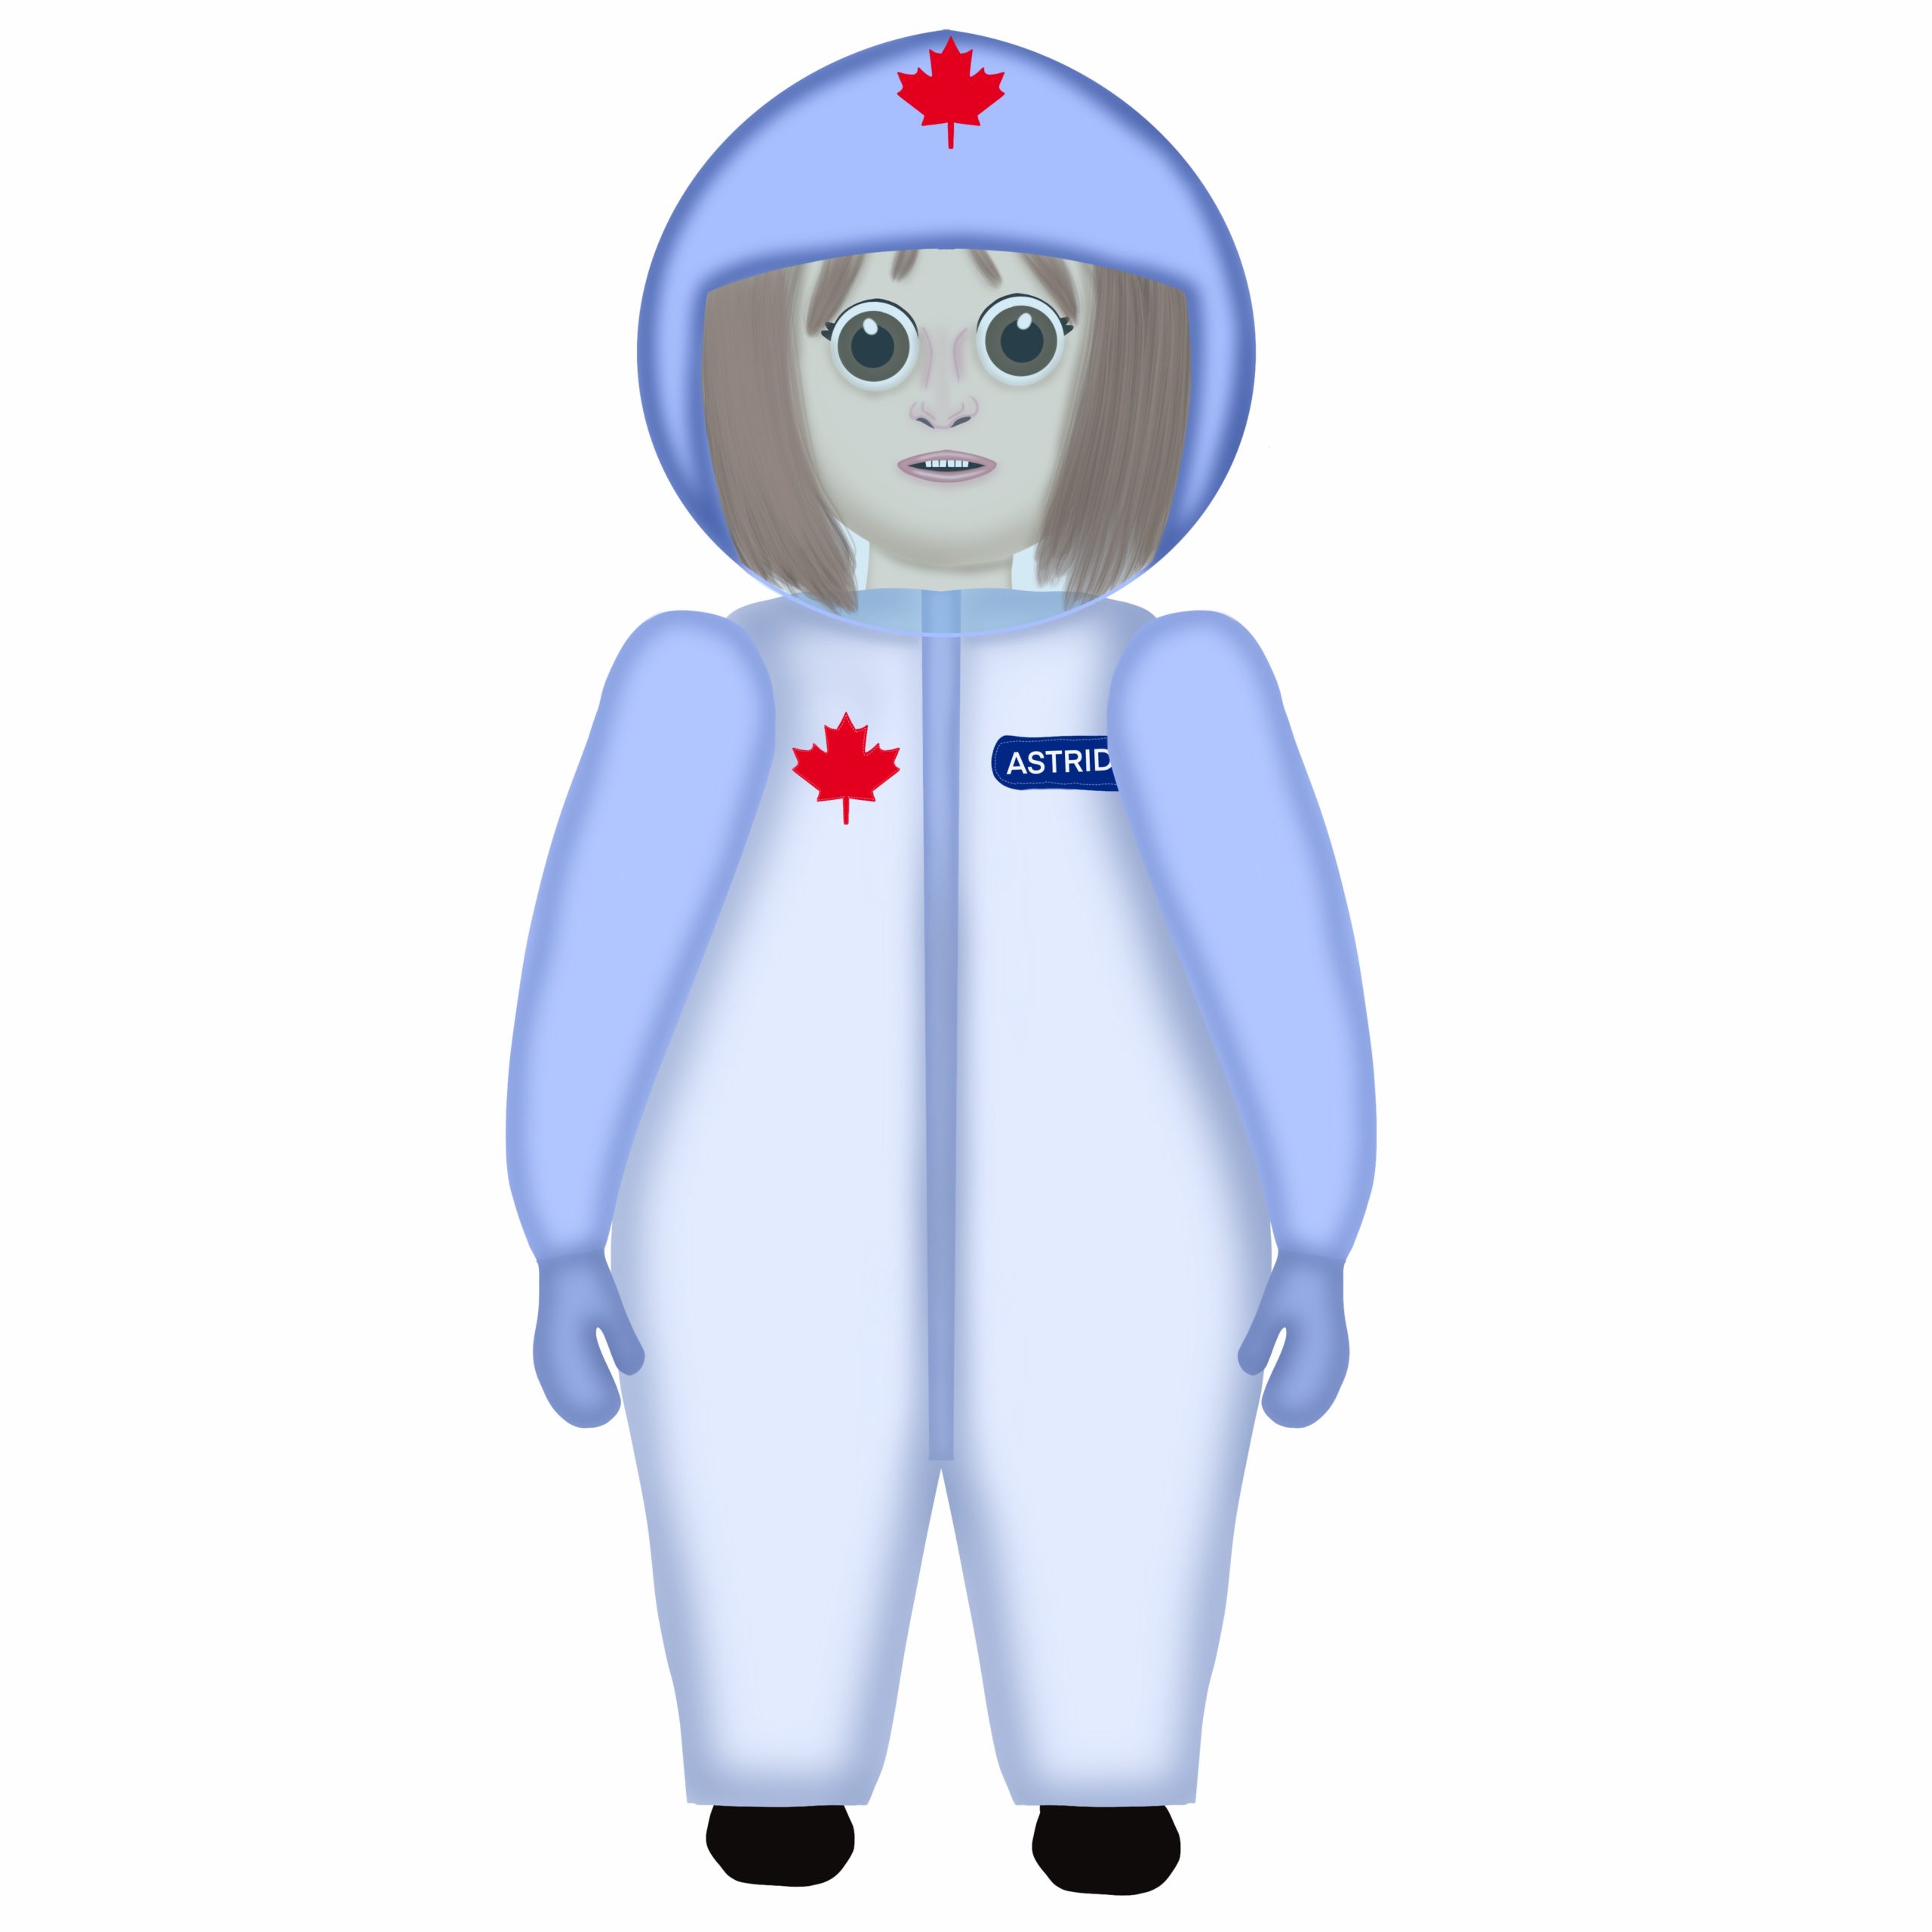 Meet Astrid the Astronaut